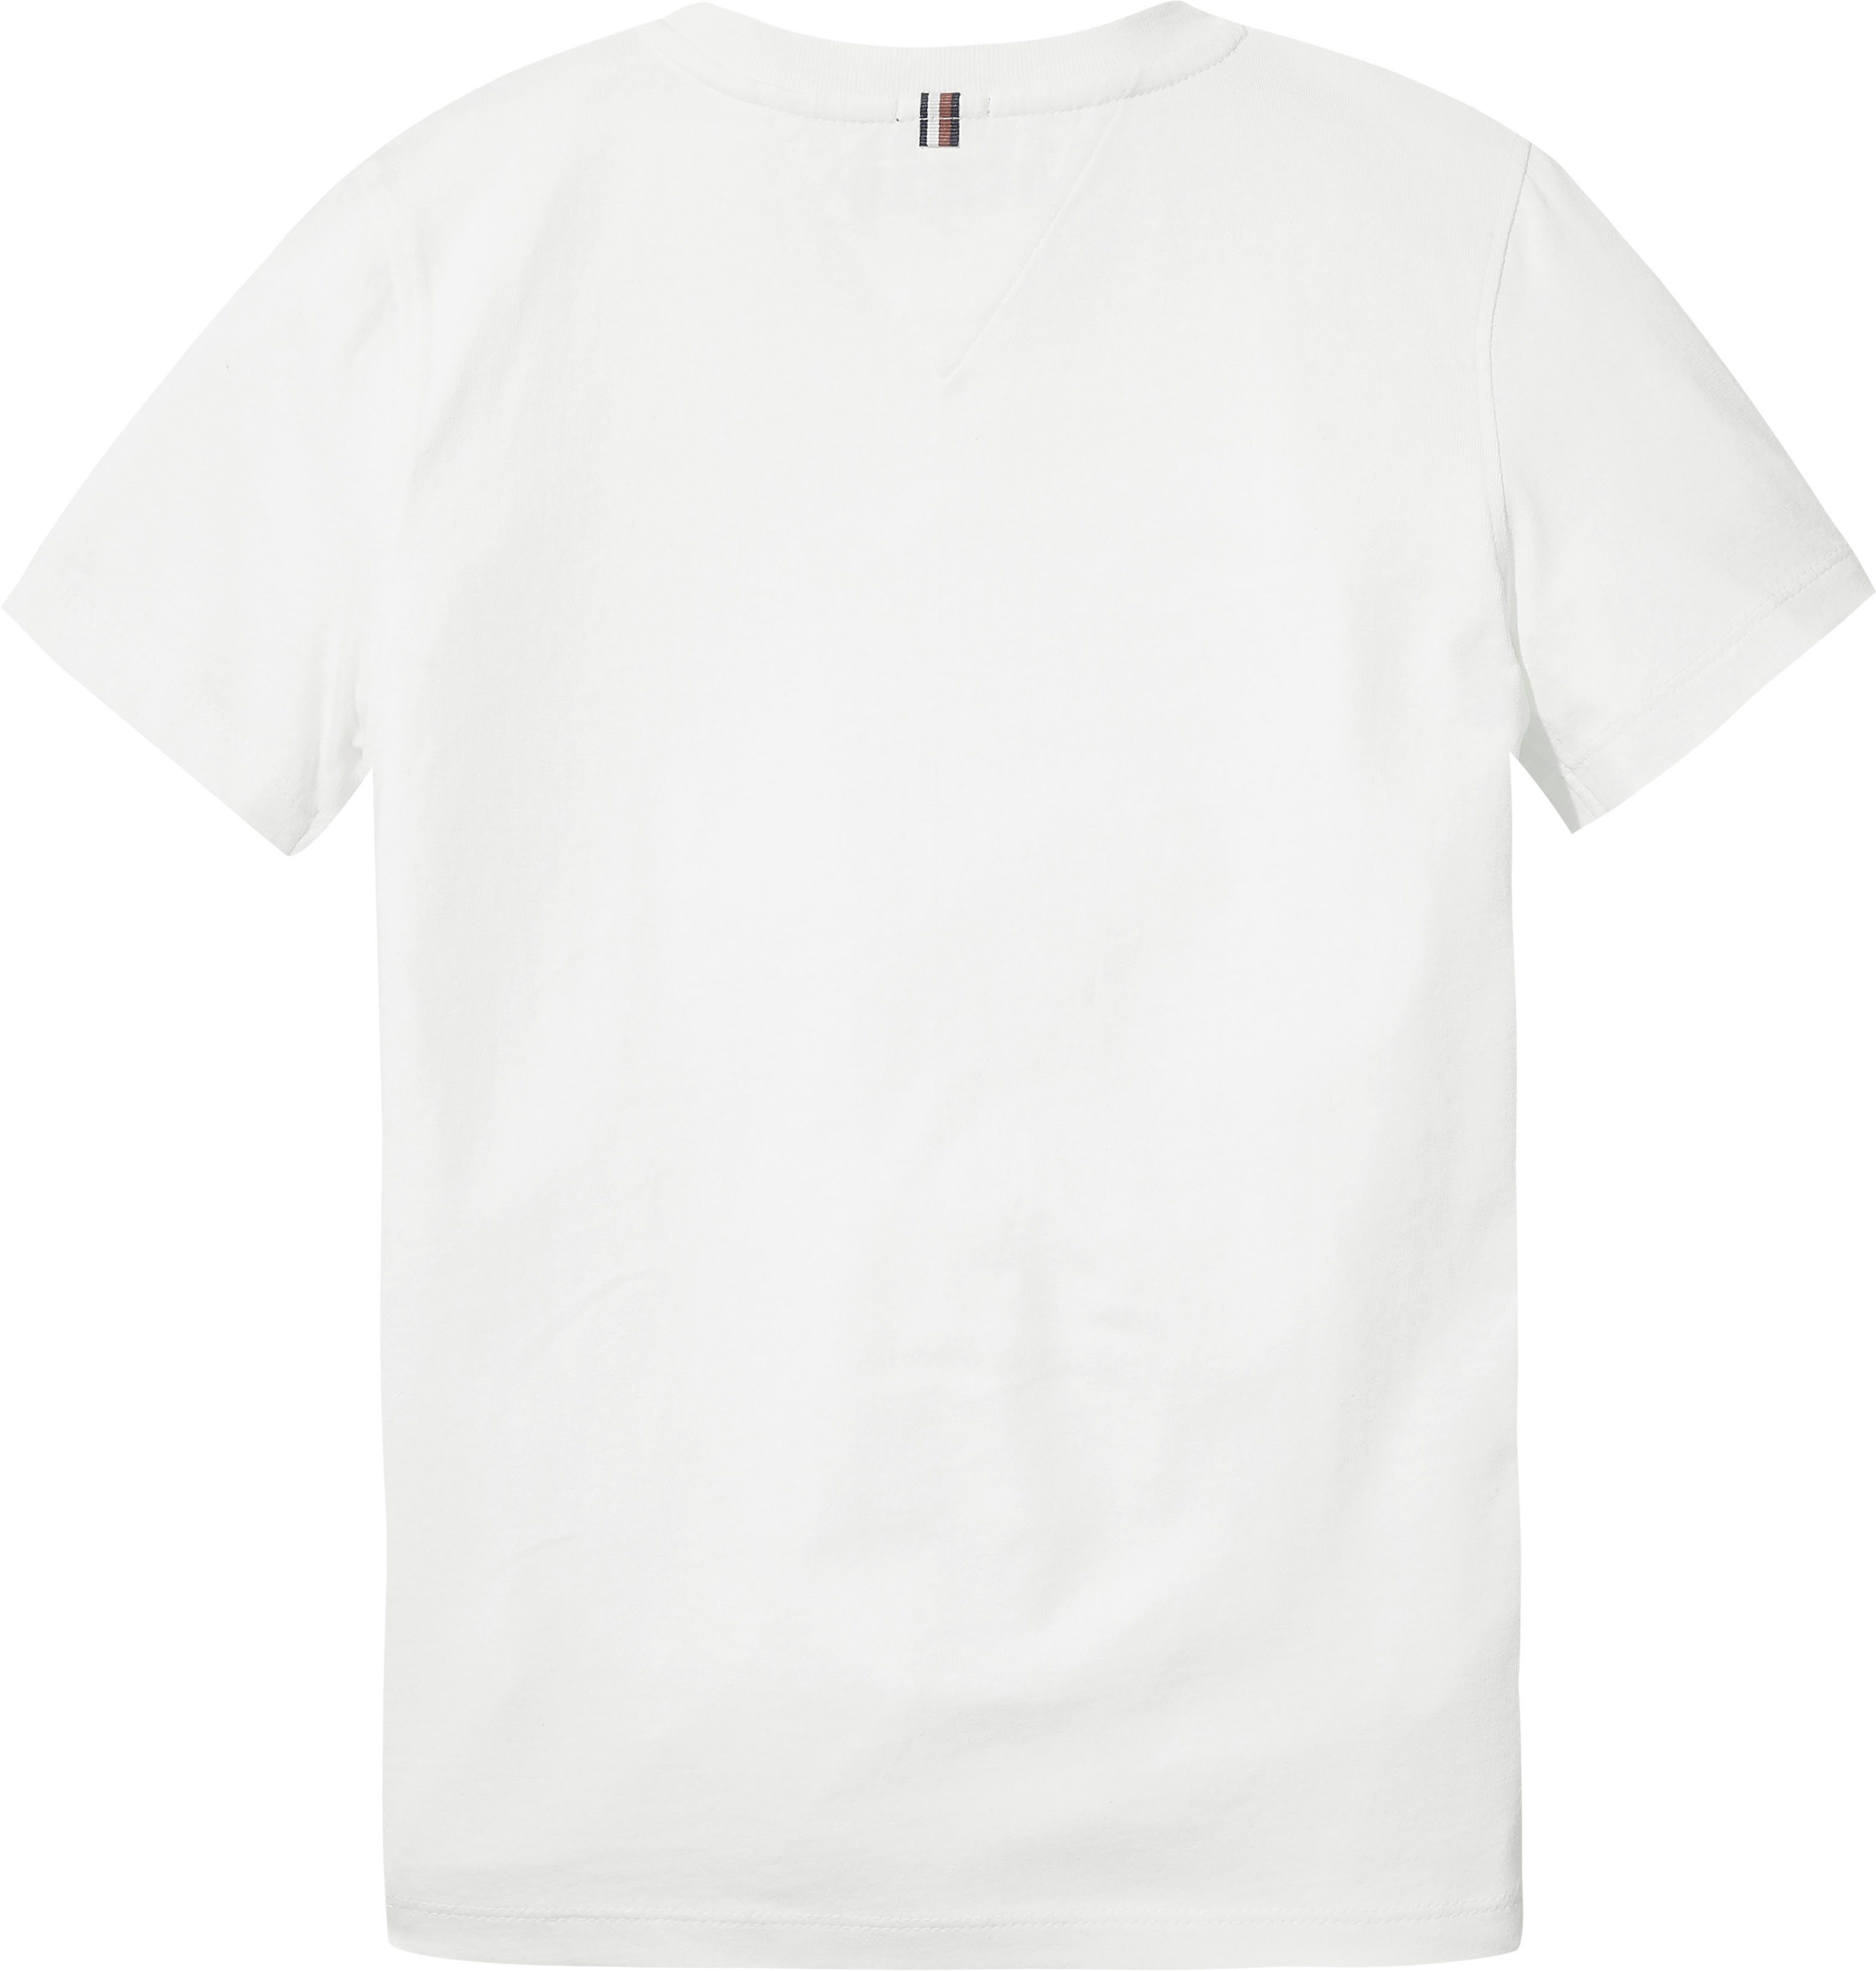 Tommy Hilfiger BASIC KNIT Junior BOYS CN Kinder Kids T-Shirt MiniMe